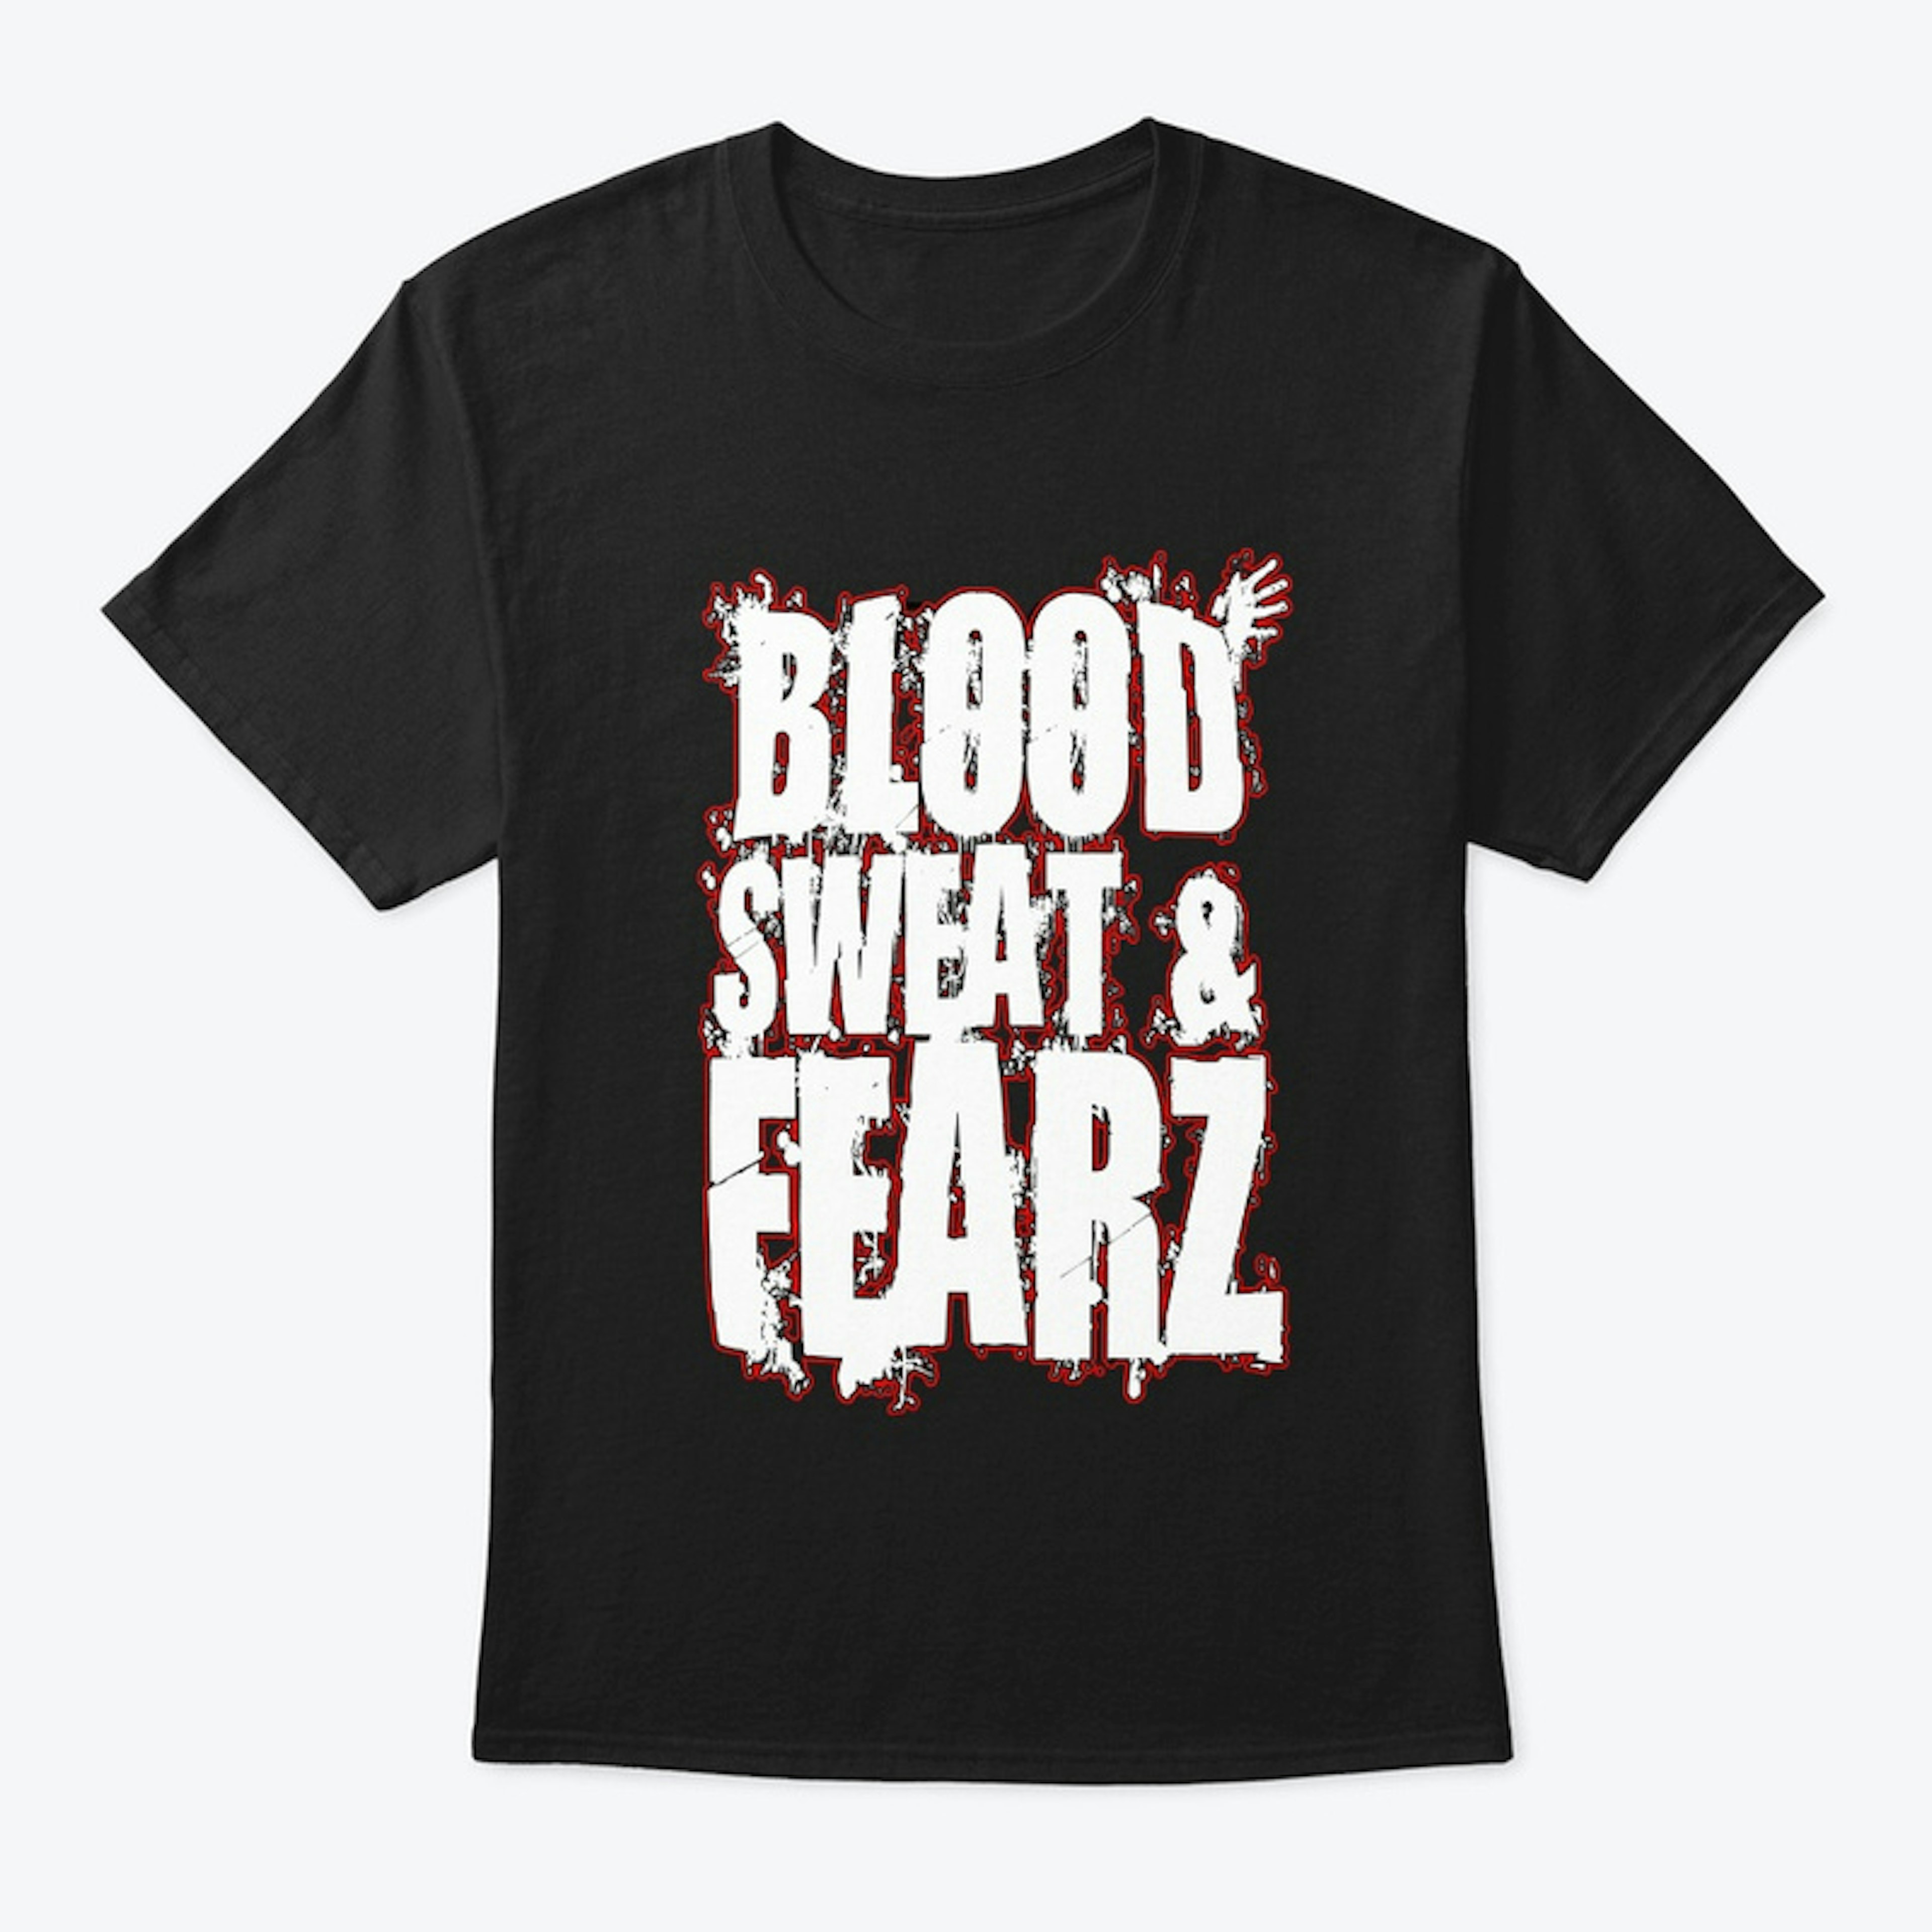 Blood, Sweat, and Fearz Shirt